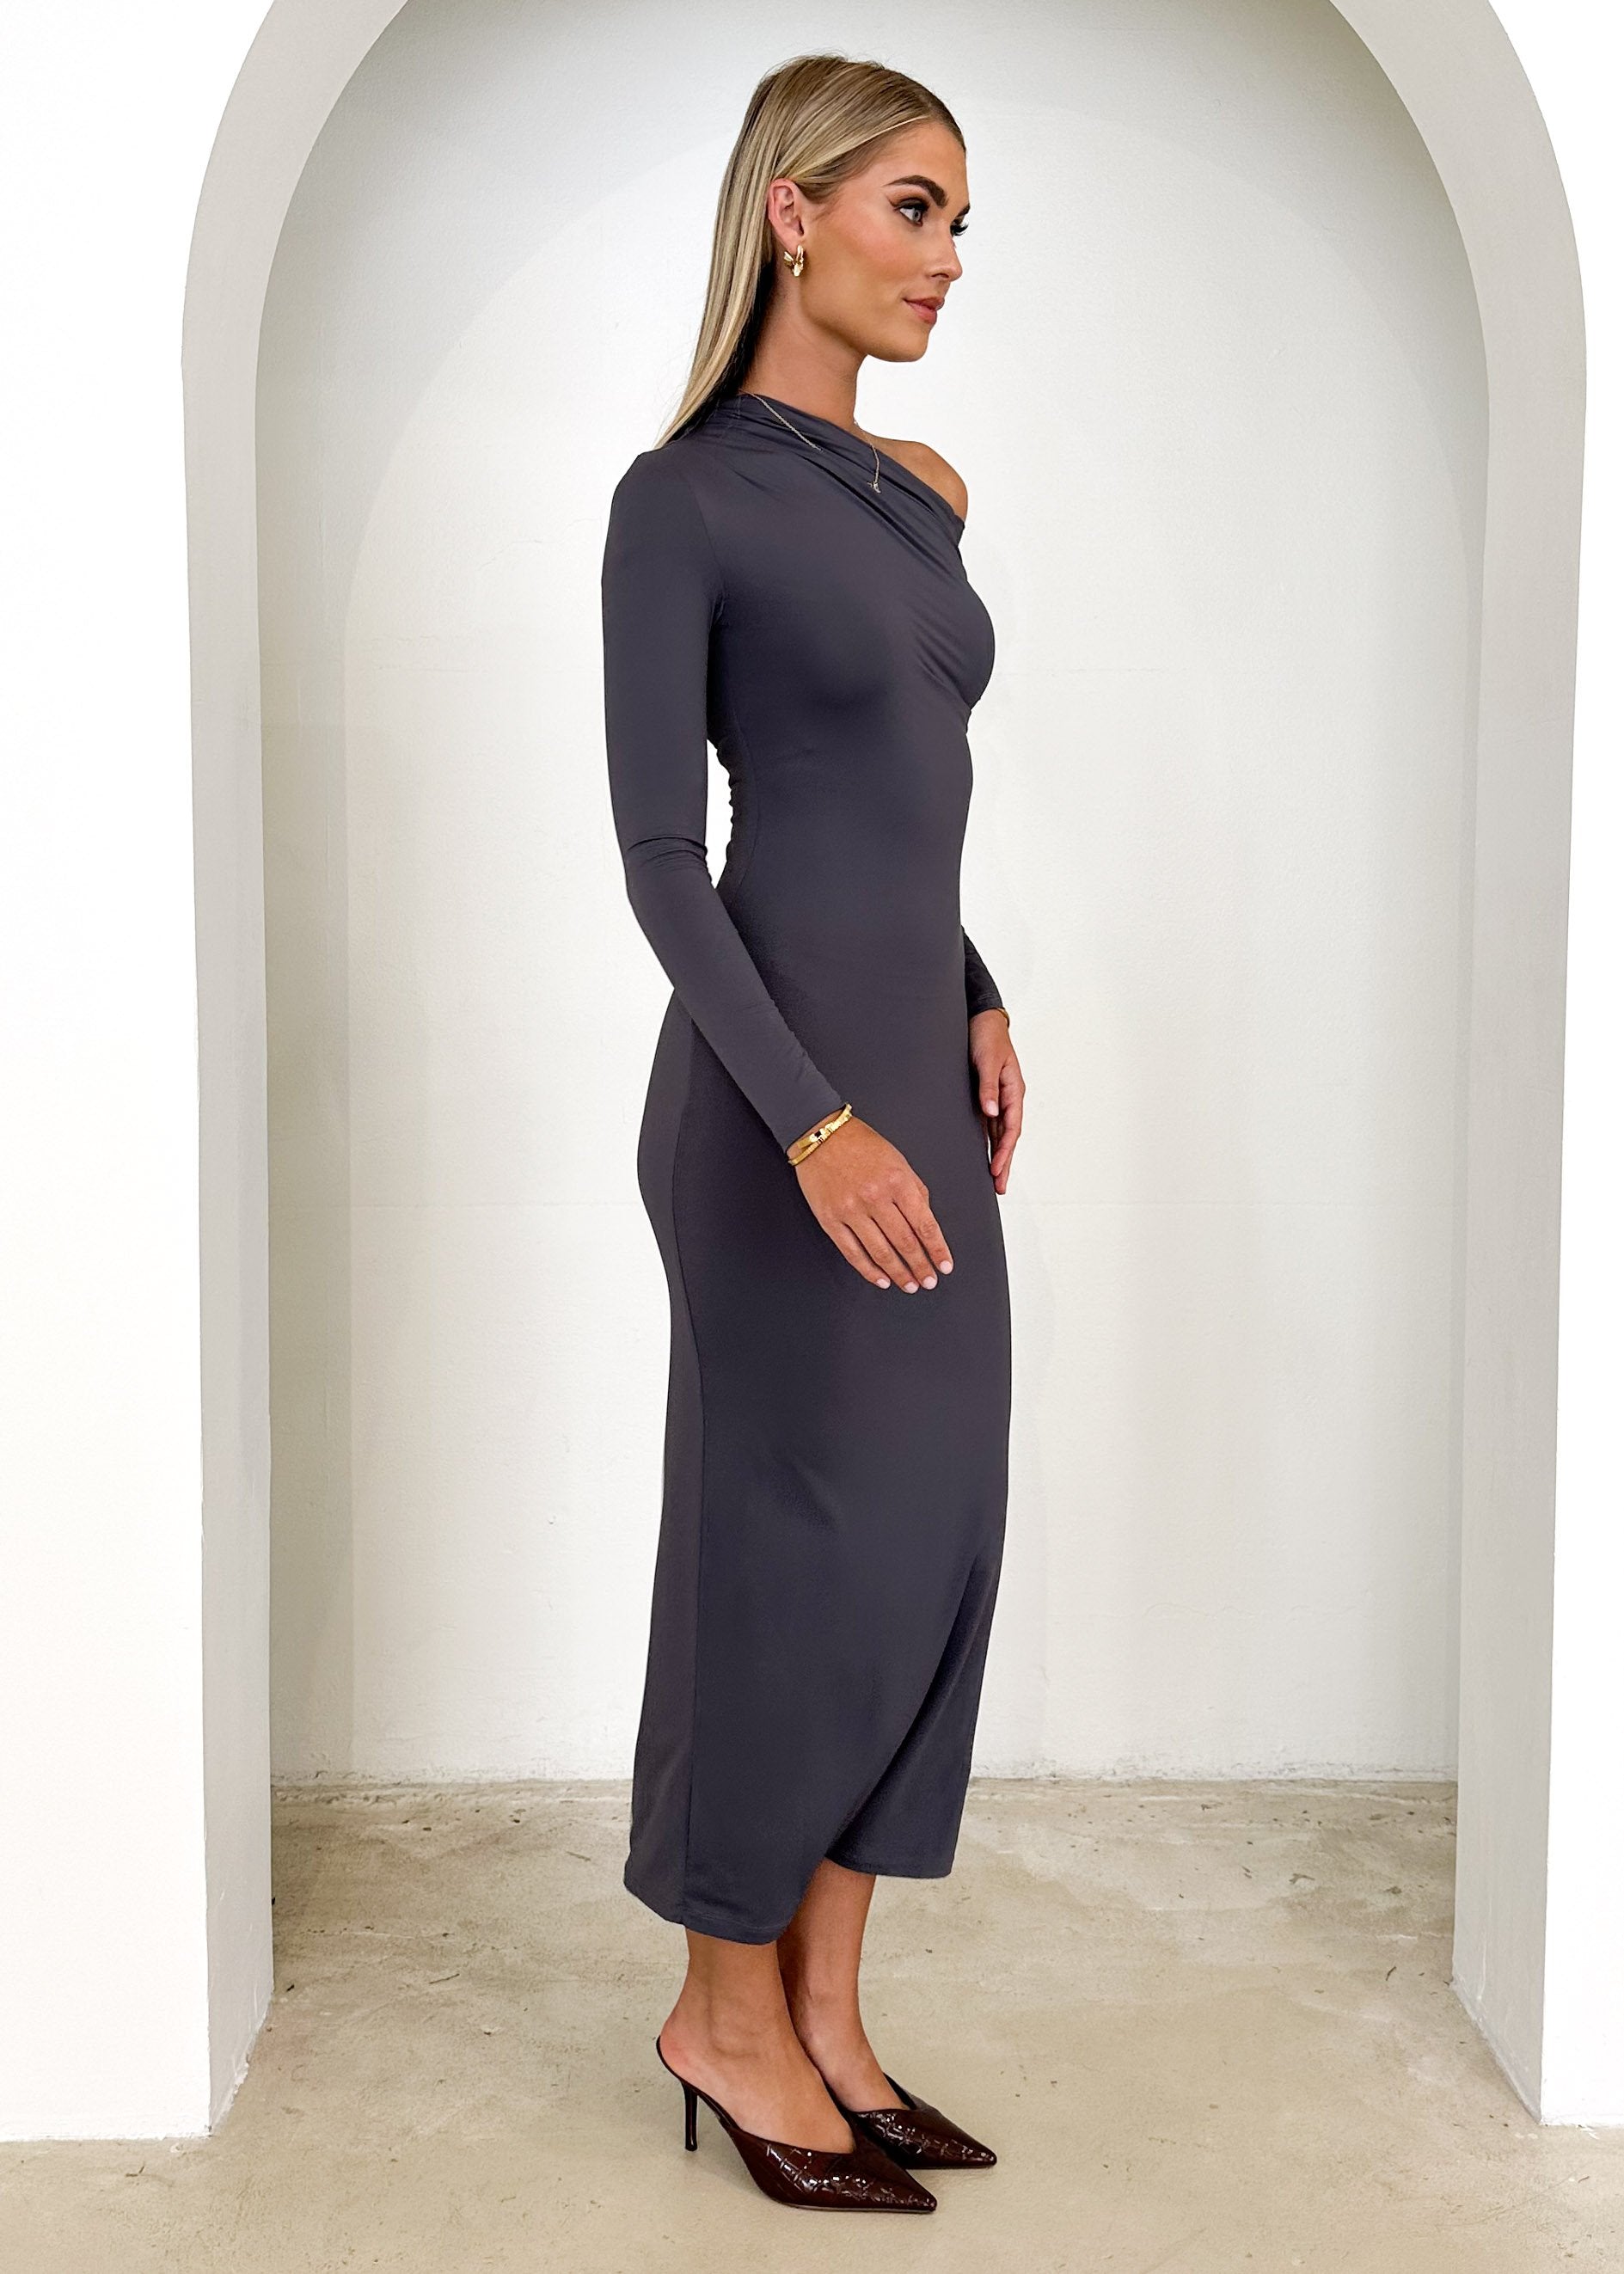 Dayla One Shoulder Midi Dress - Charcoal